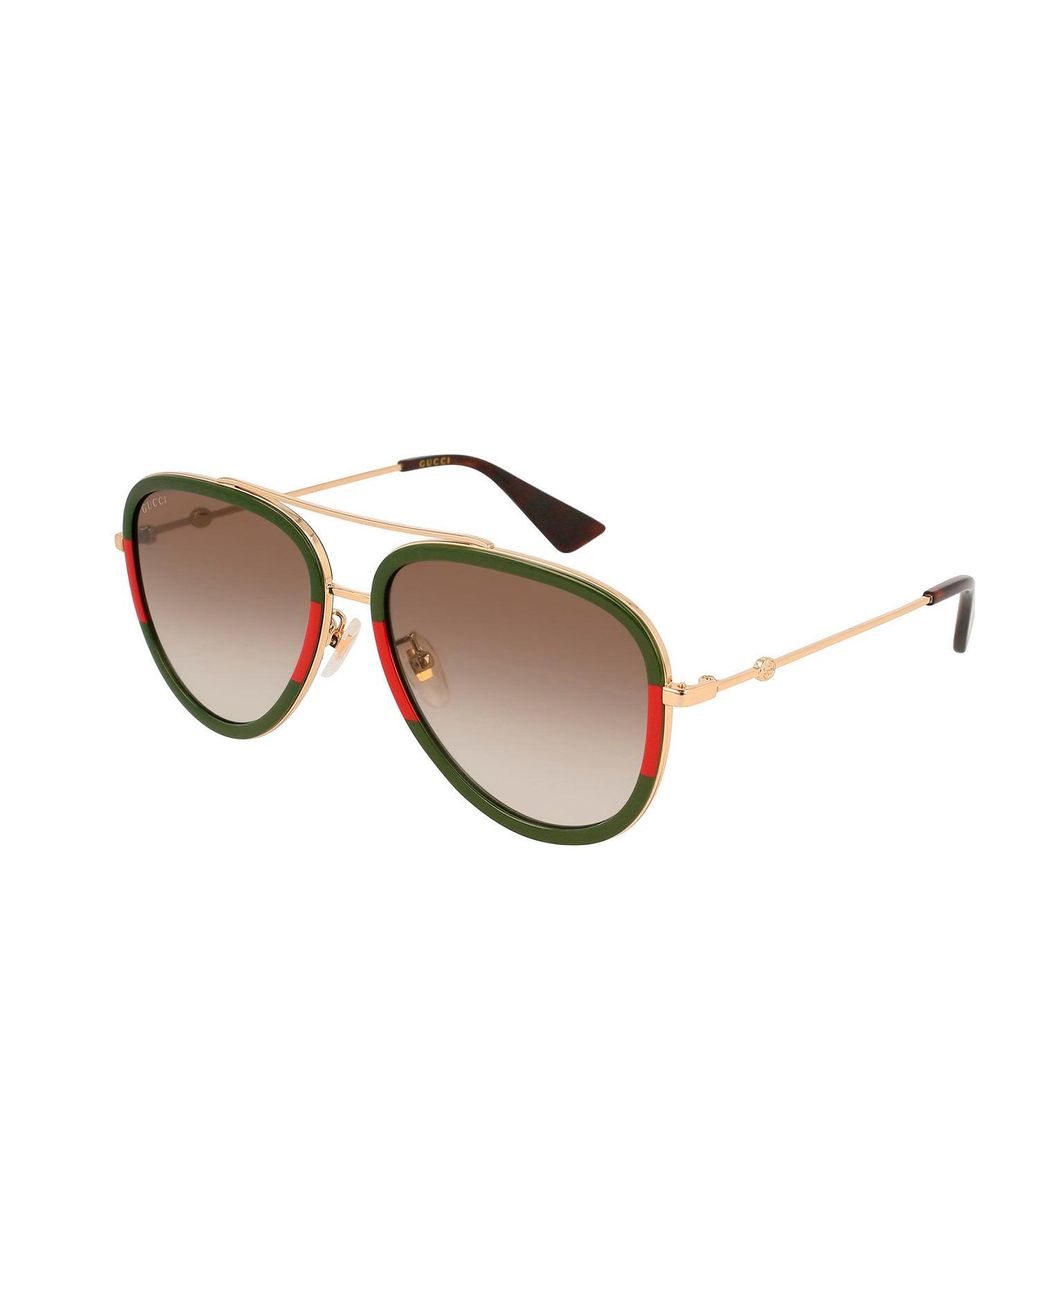 Gucci Sunglasses GG0062S 003 Gold/Green/Red/Tortoise/Green Gradient |  EyeSpecs.com